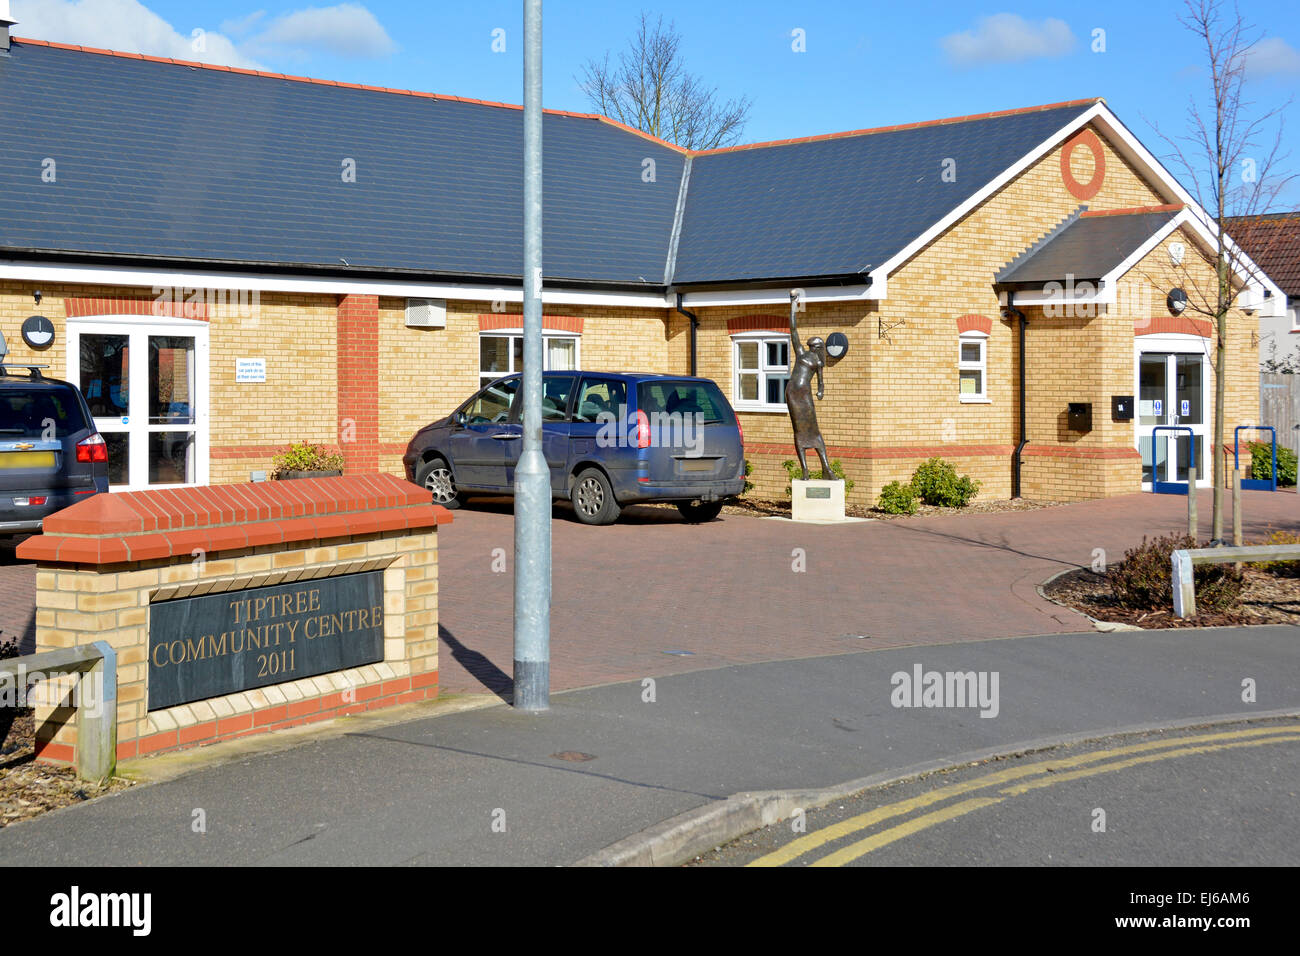 Community centre sign building and car park Tiptree village Essex England UK Stock Photo